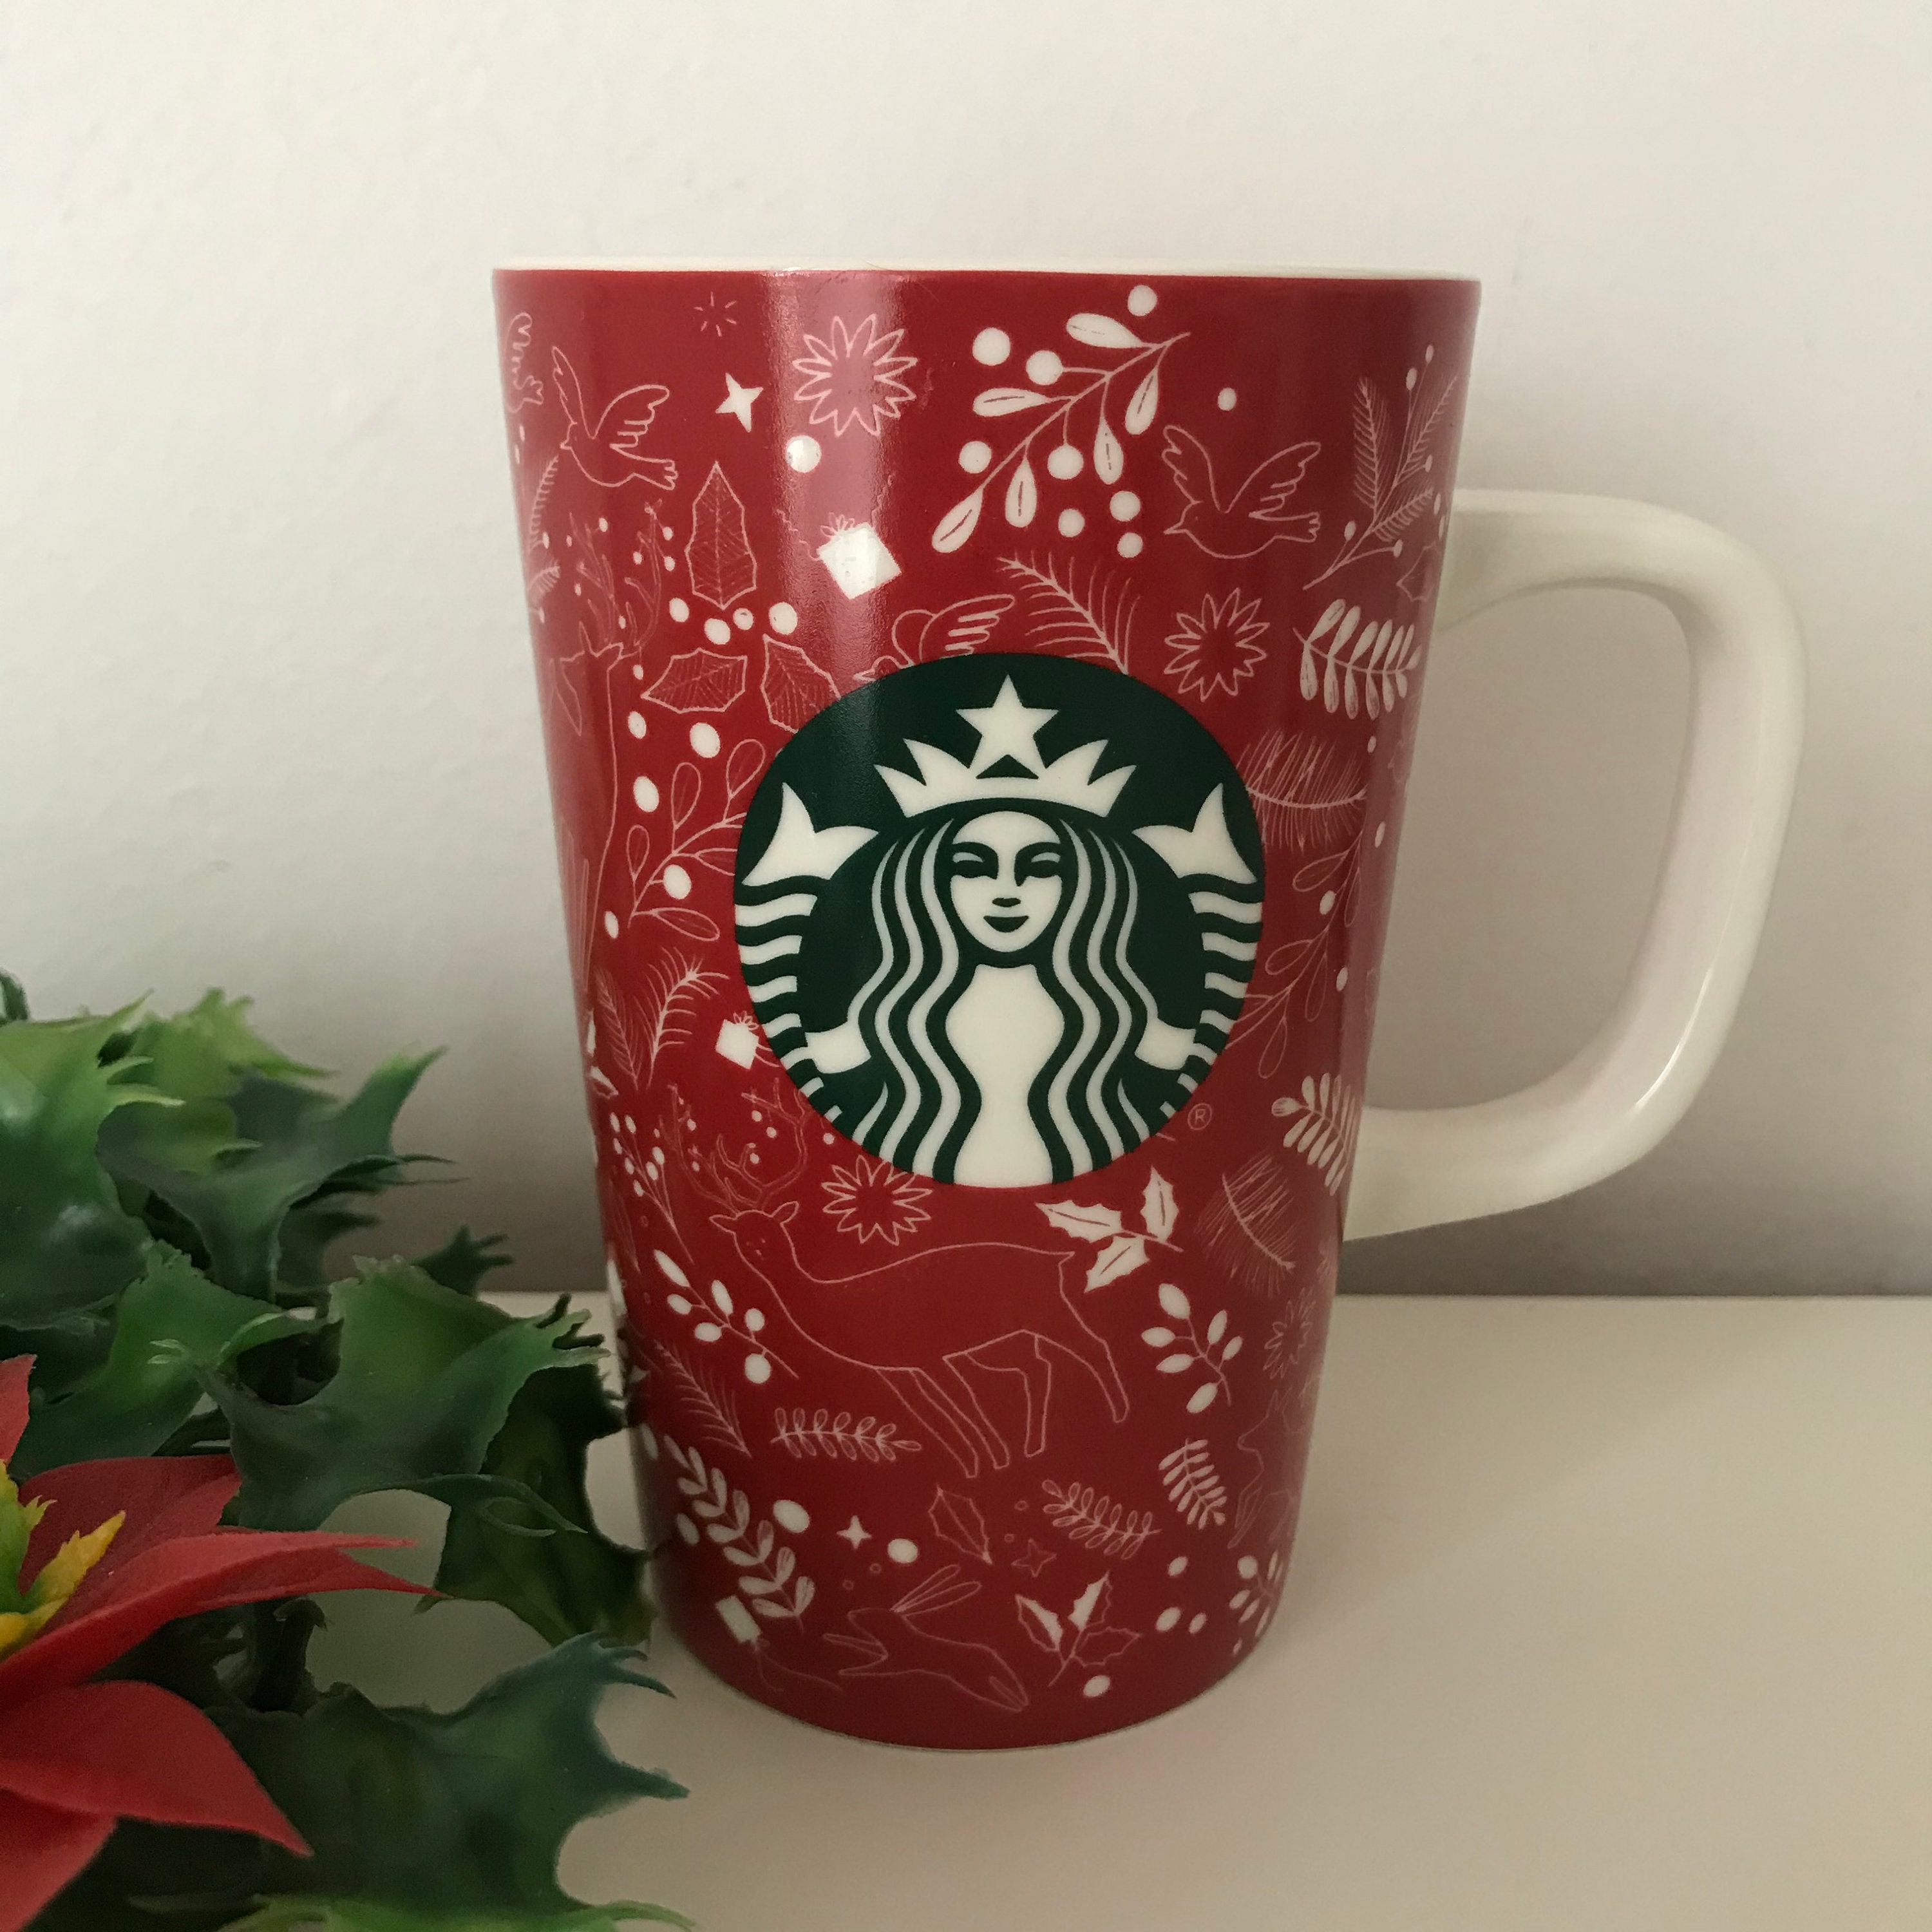 STARBUCKS Siren Mermaid Tail Lid Stopper | Coffee Mug Cup Reusable Holiday  Gift